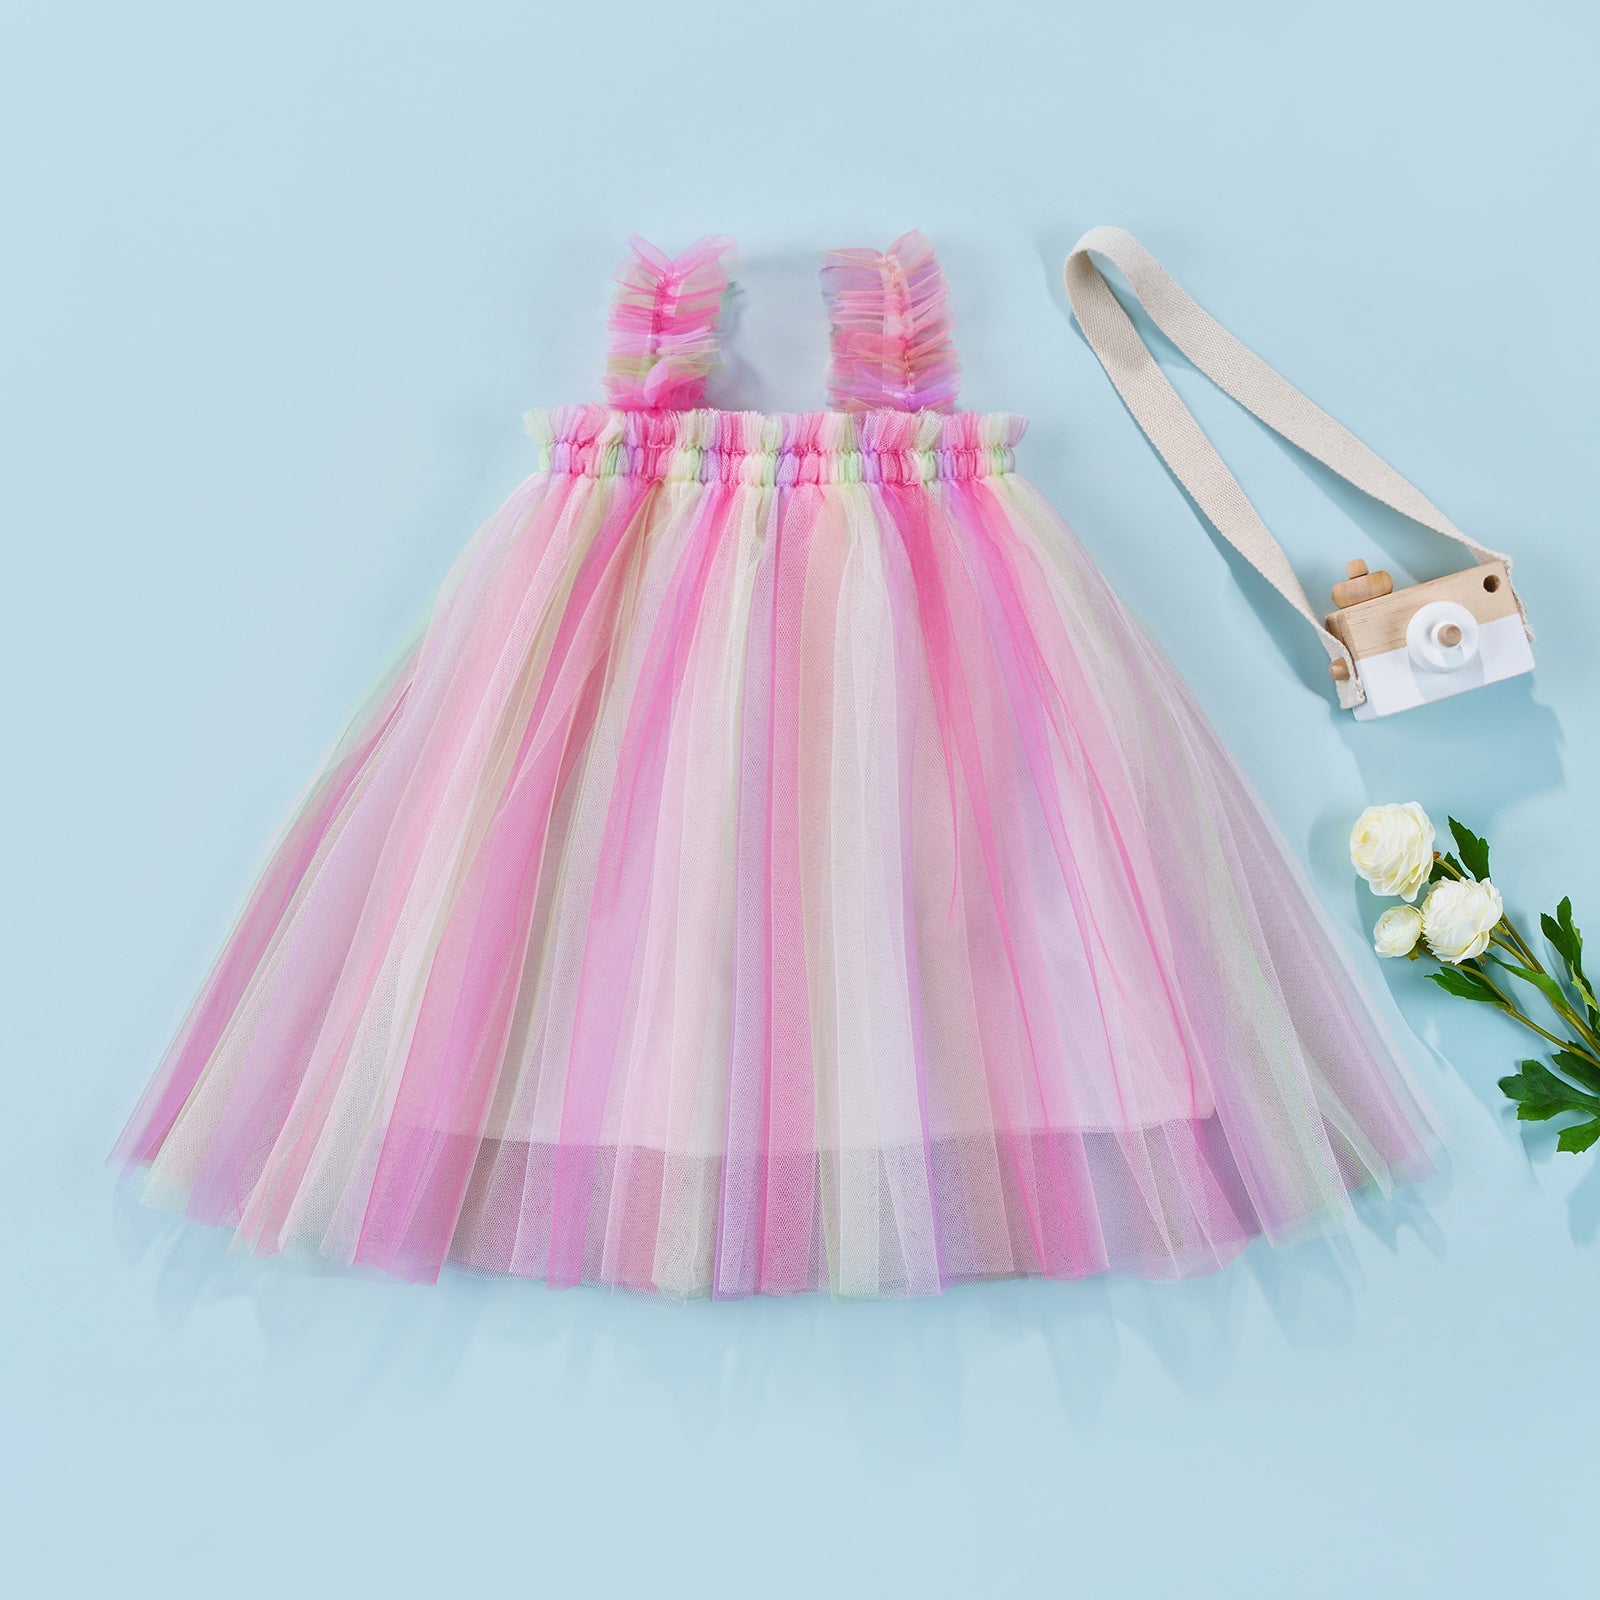 Vestido Infantil Tule Princesinha vestido Loja Click Certo Cores 2-3 anos 55cm 